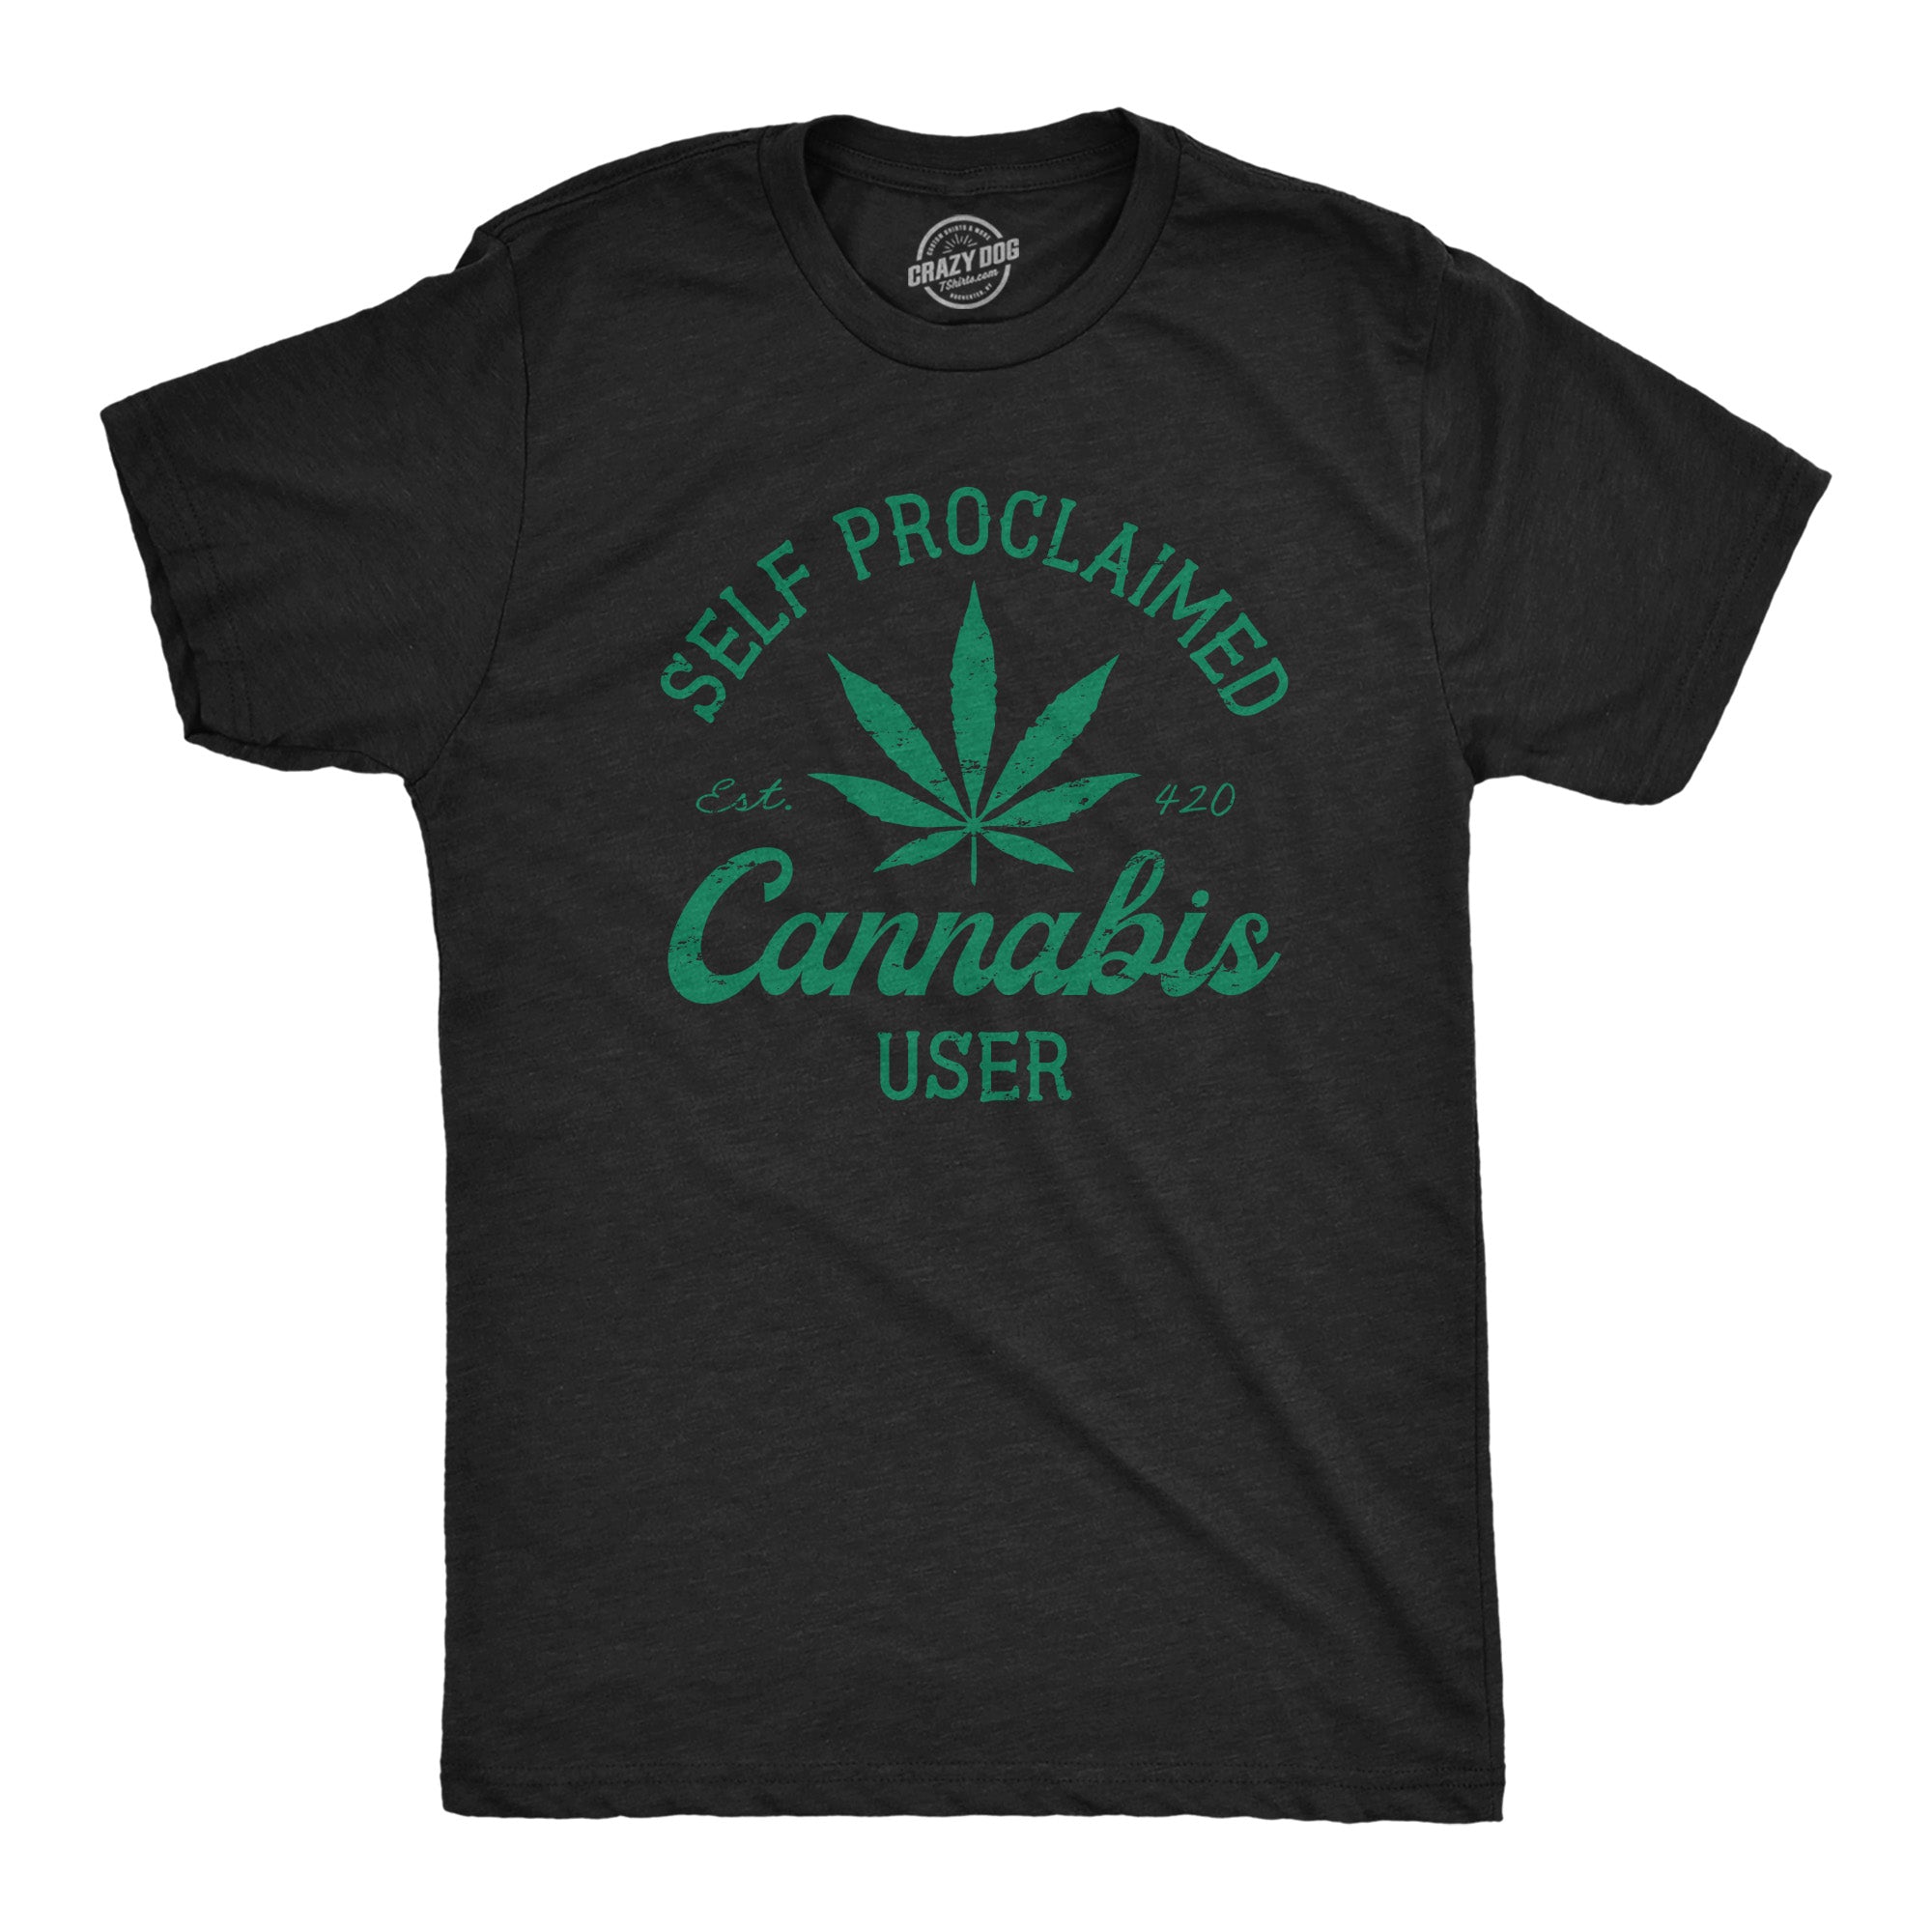 Funny Heather Black - CANNABIS Self Proclaimed Cannabis User Mens T Shirt Nerdy 420 Tee